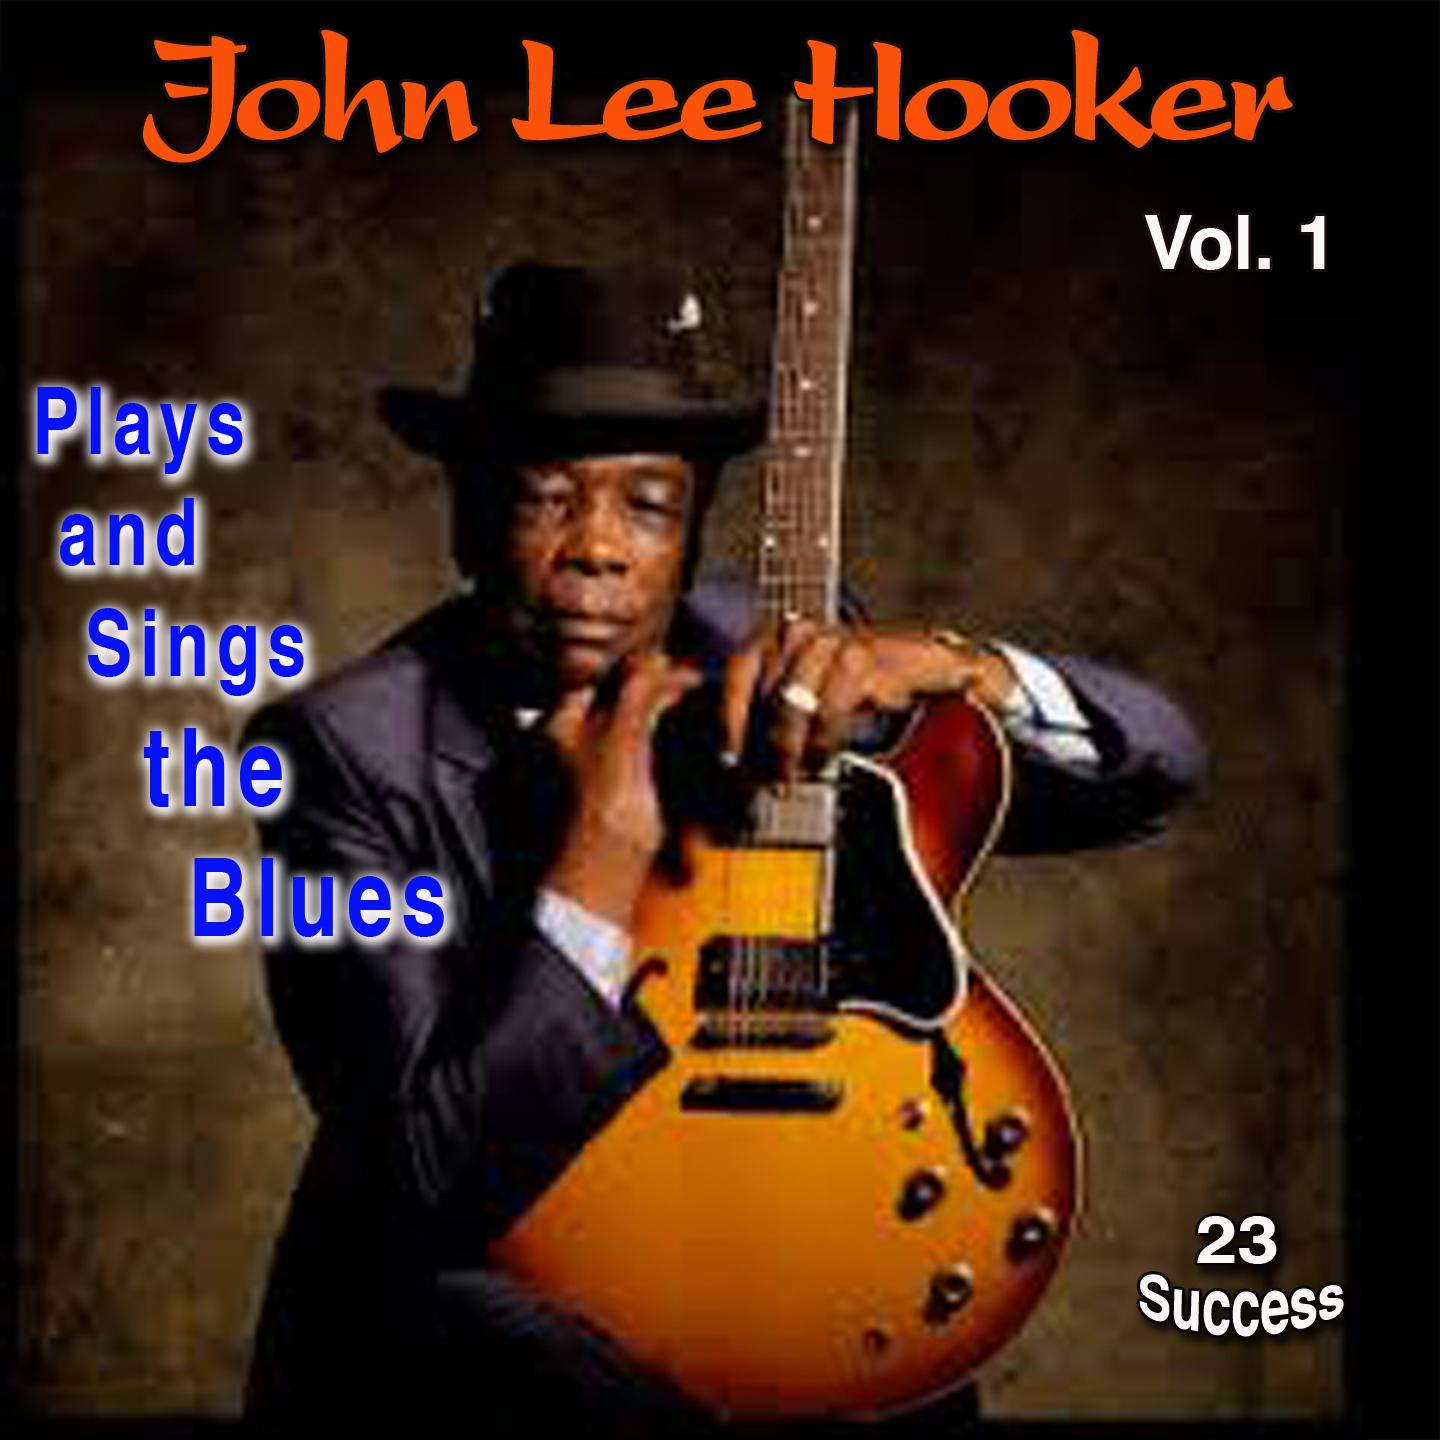 John Lee Hooker Plays and Sings the Blues, Vol. 1 (23 Success)